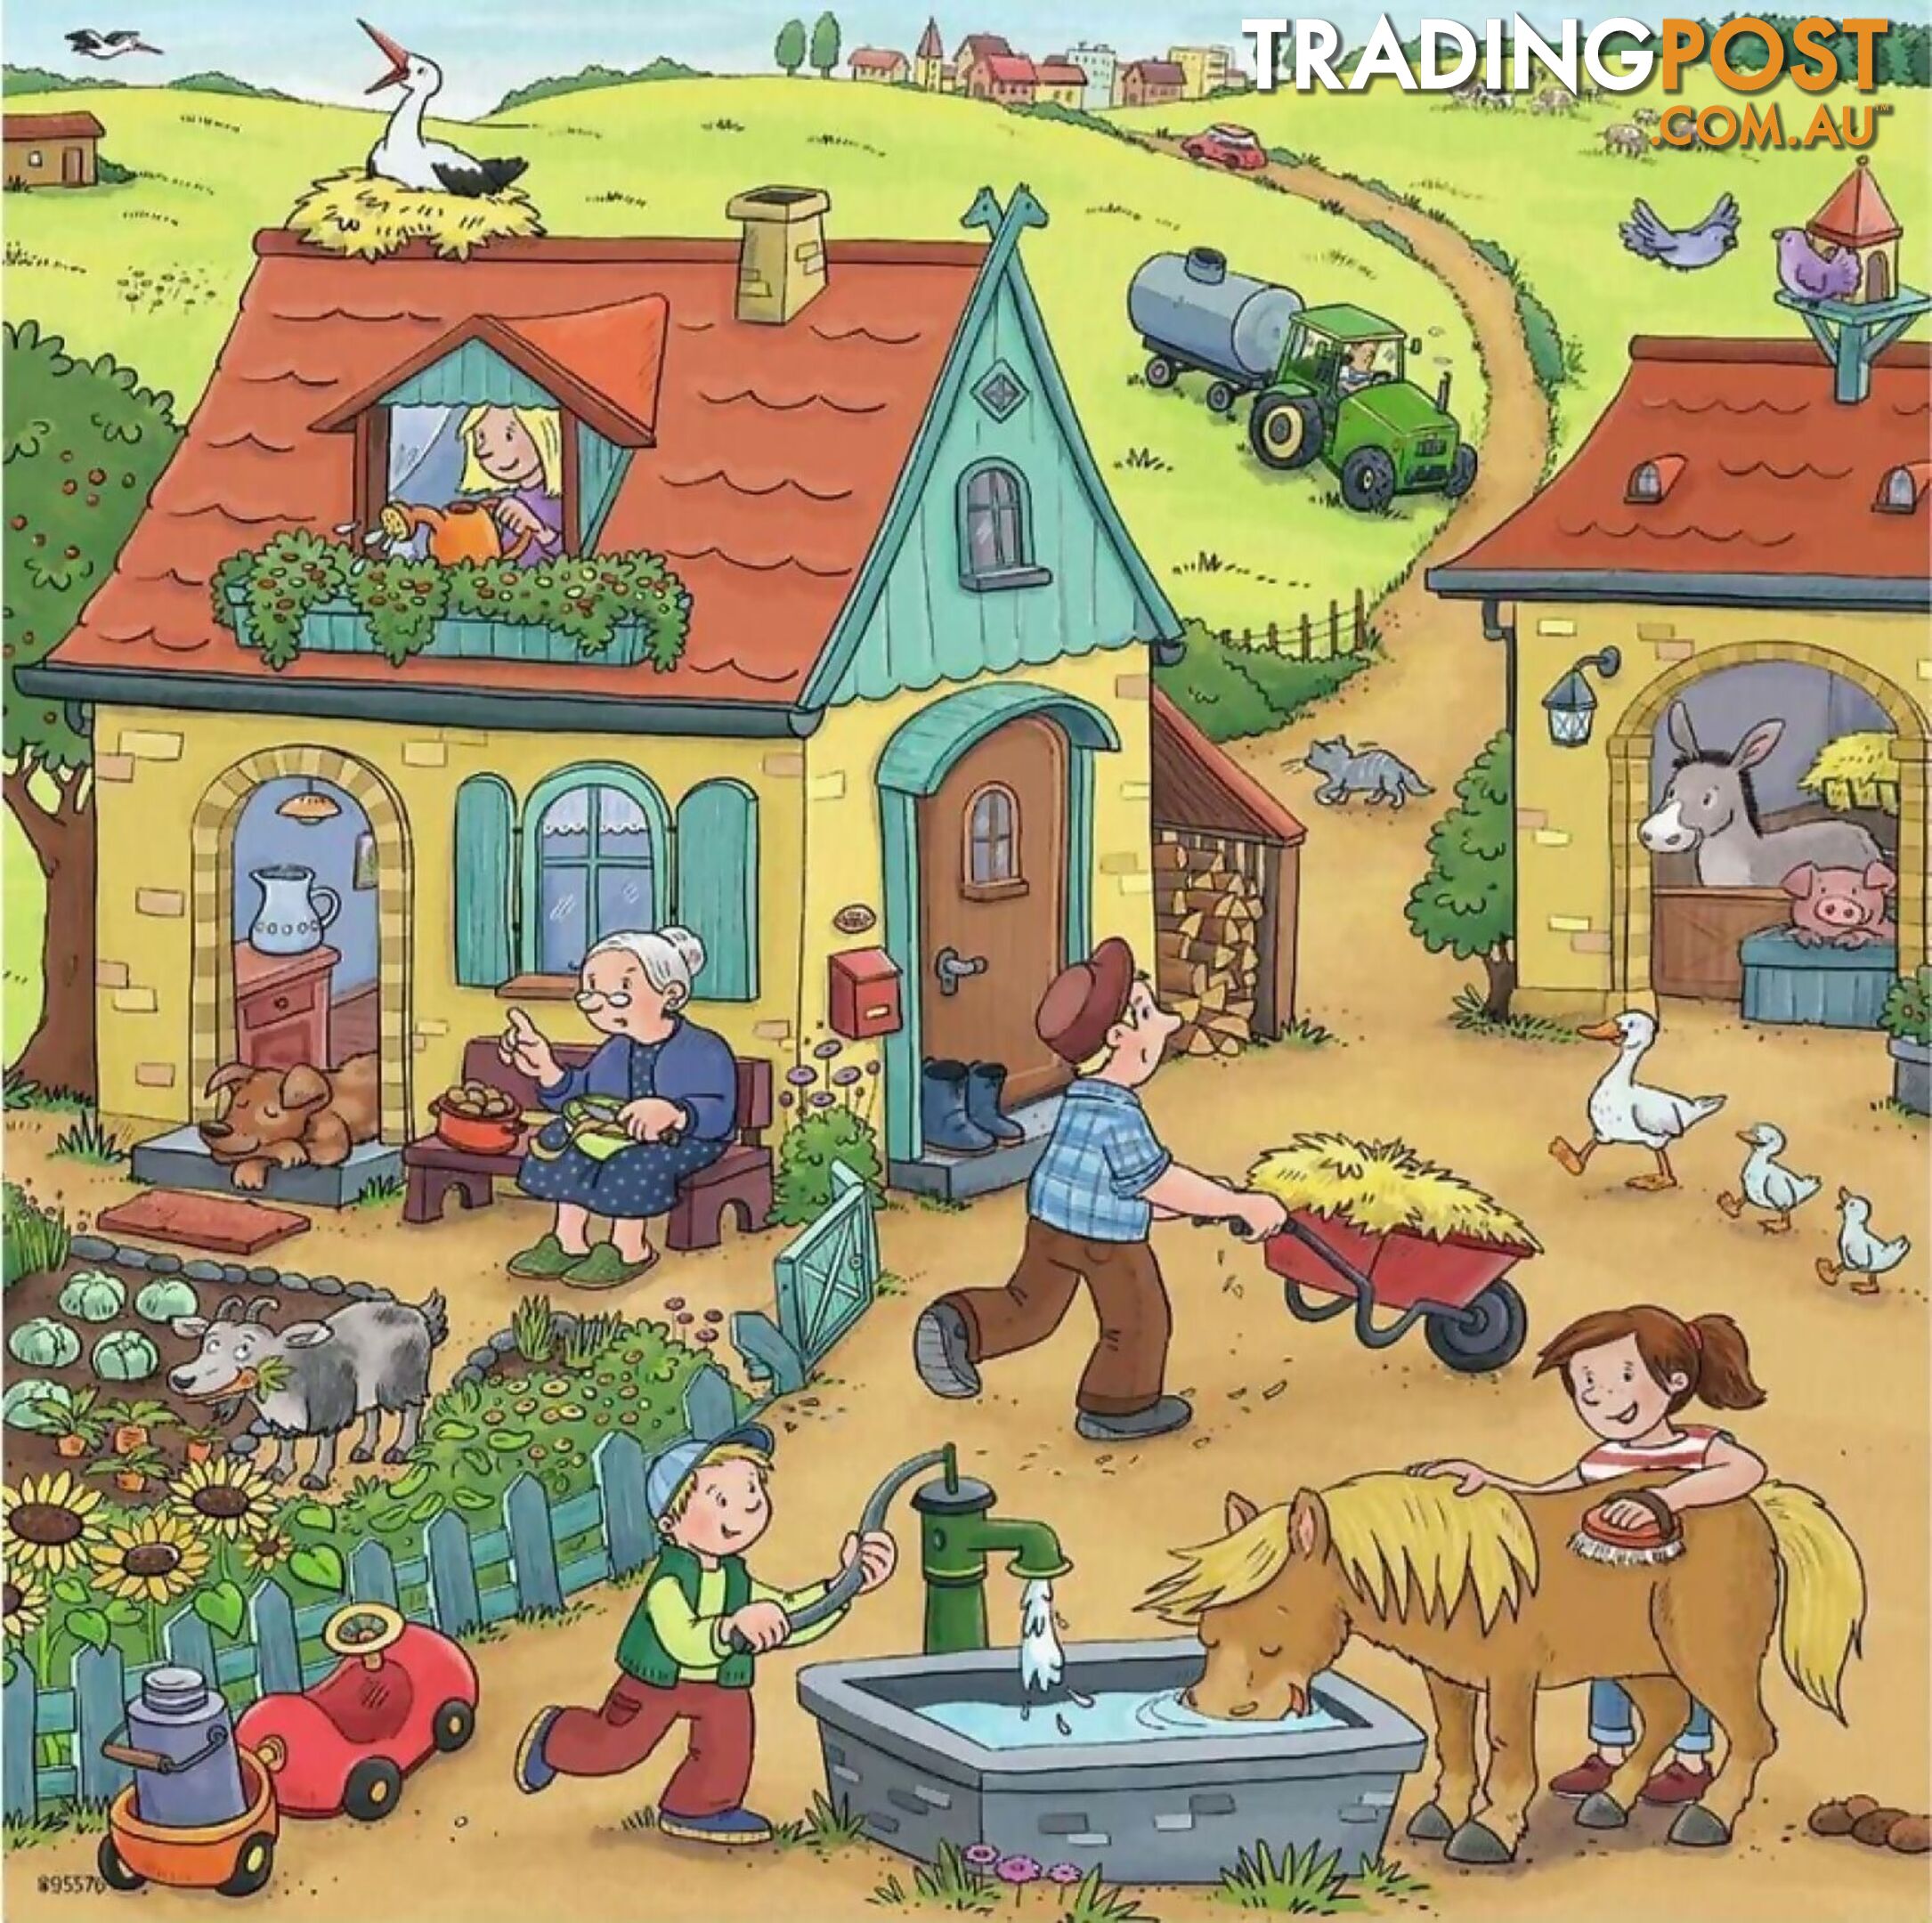 Ravensburger - On The Farm Jigsaw Puzzle 3 X 49pc - Mdrb05078 - 4005556050789